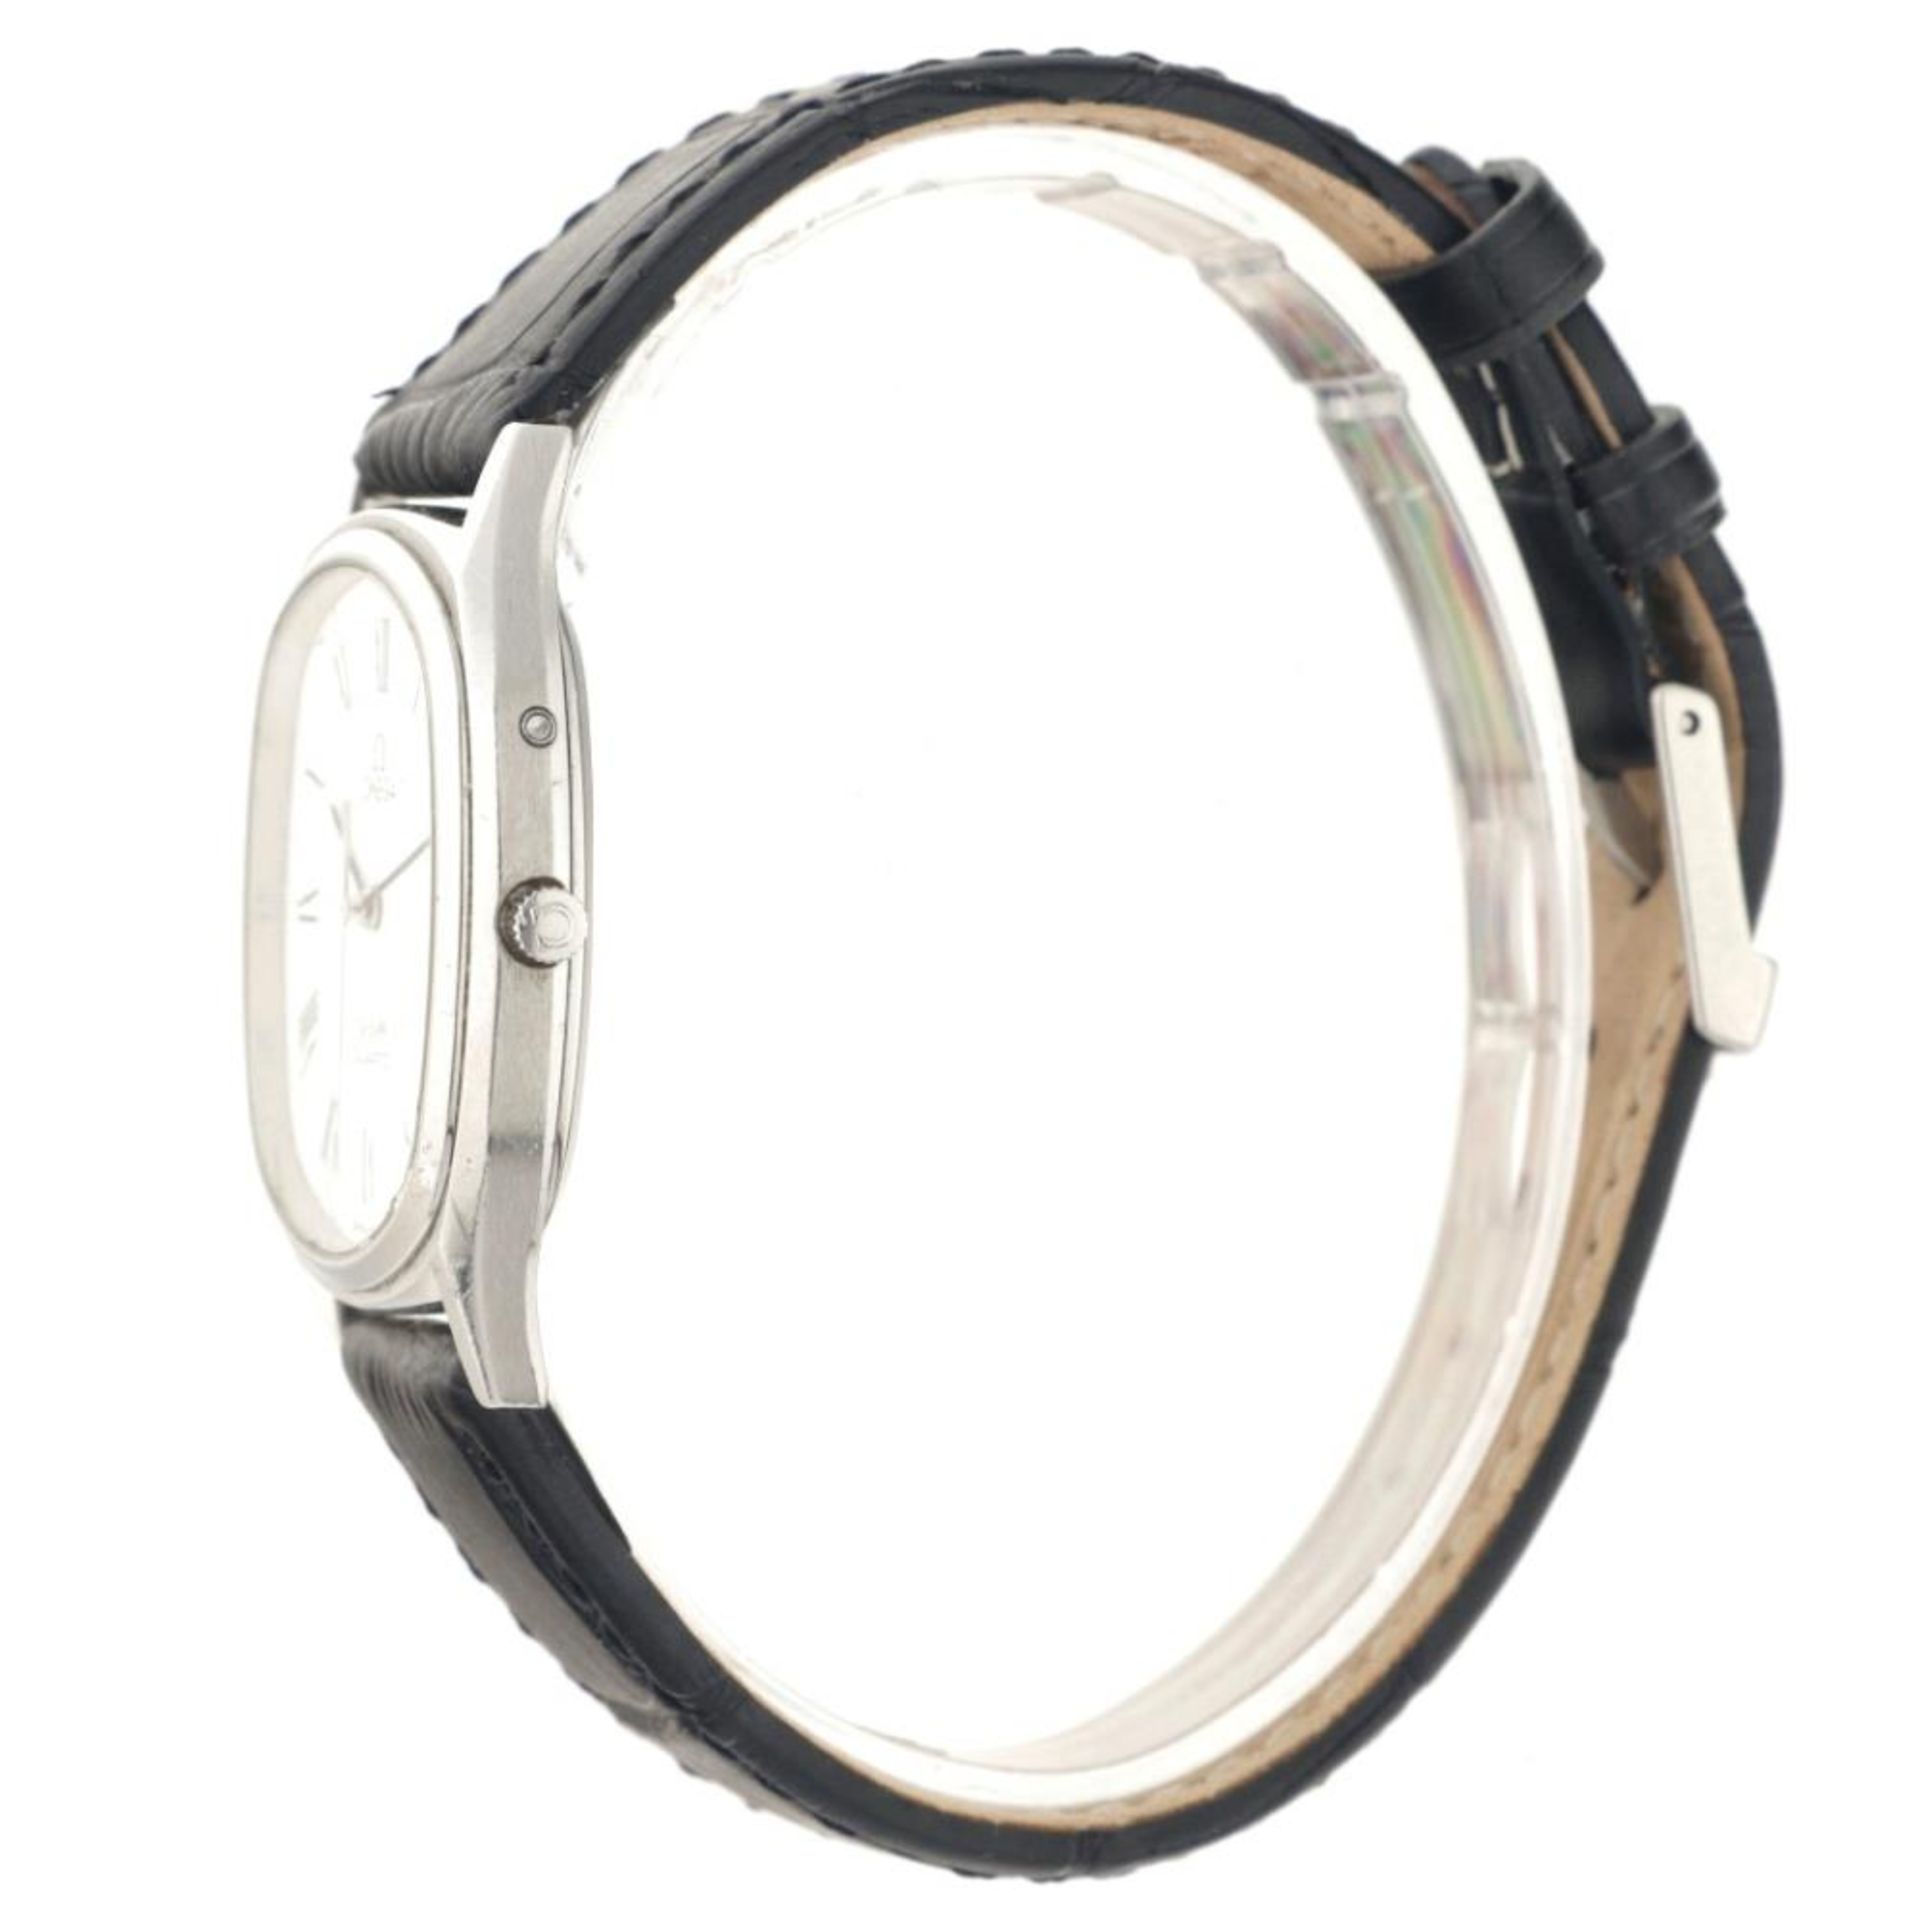 Omega de Ville 1920050 - Men's watch - approx. 1980. - Image 4 of 5